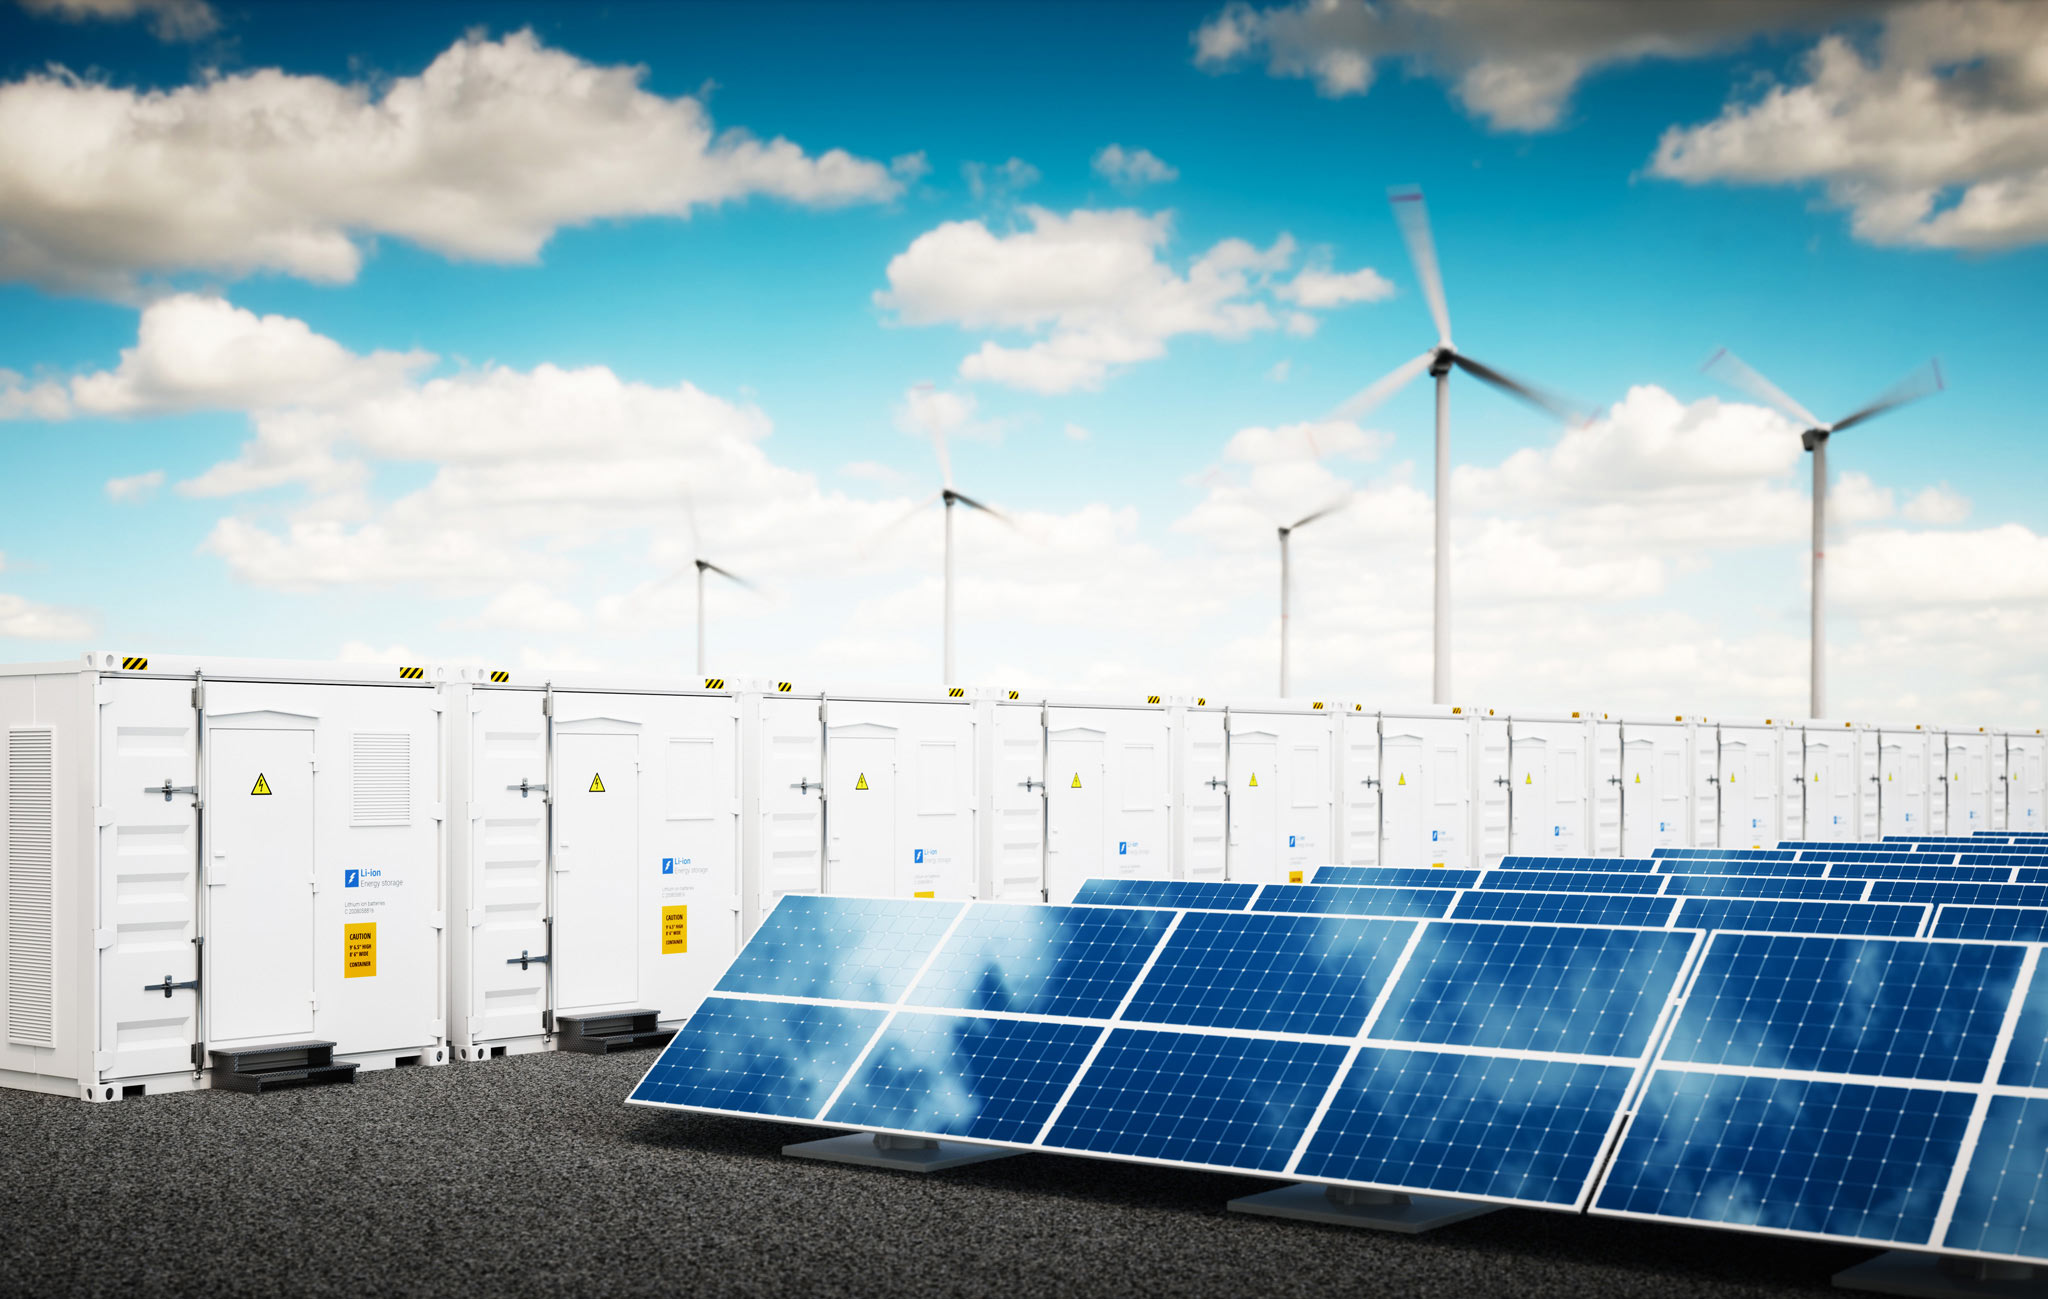 How do I choose a renewable energy provider?